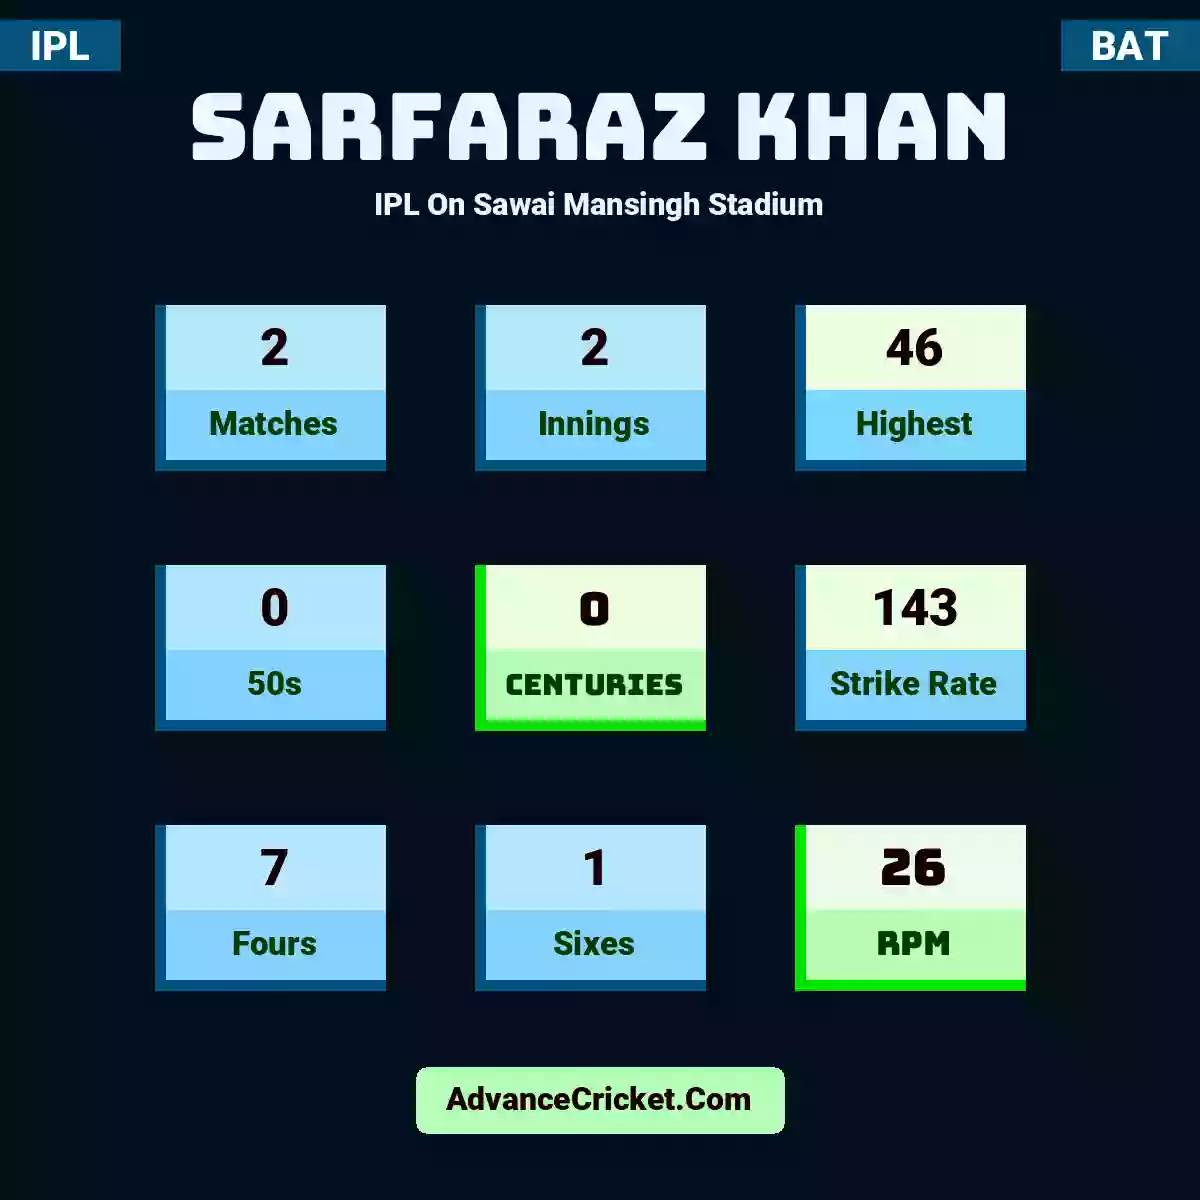 Sarfaraz Khan IPL  On Sawai Mansingh Stadium, Sarfaraz Khan played 2 matches, scored 46 runs as highest, 0 half-centuries, and 0 centuries, with a strike rate of 143. S.Khan hit 7 fours and 1 sixes, with an RPM of 26.